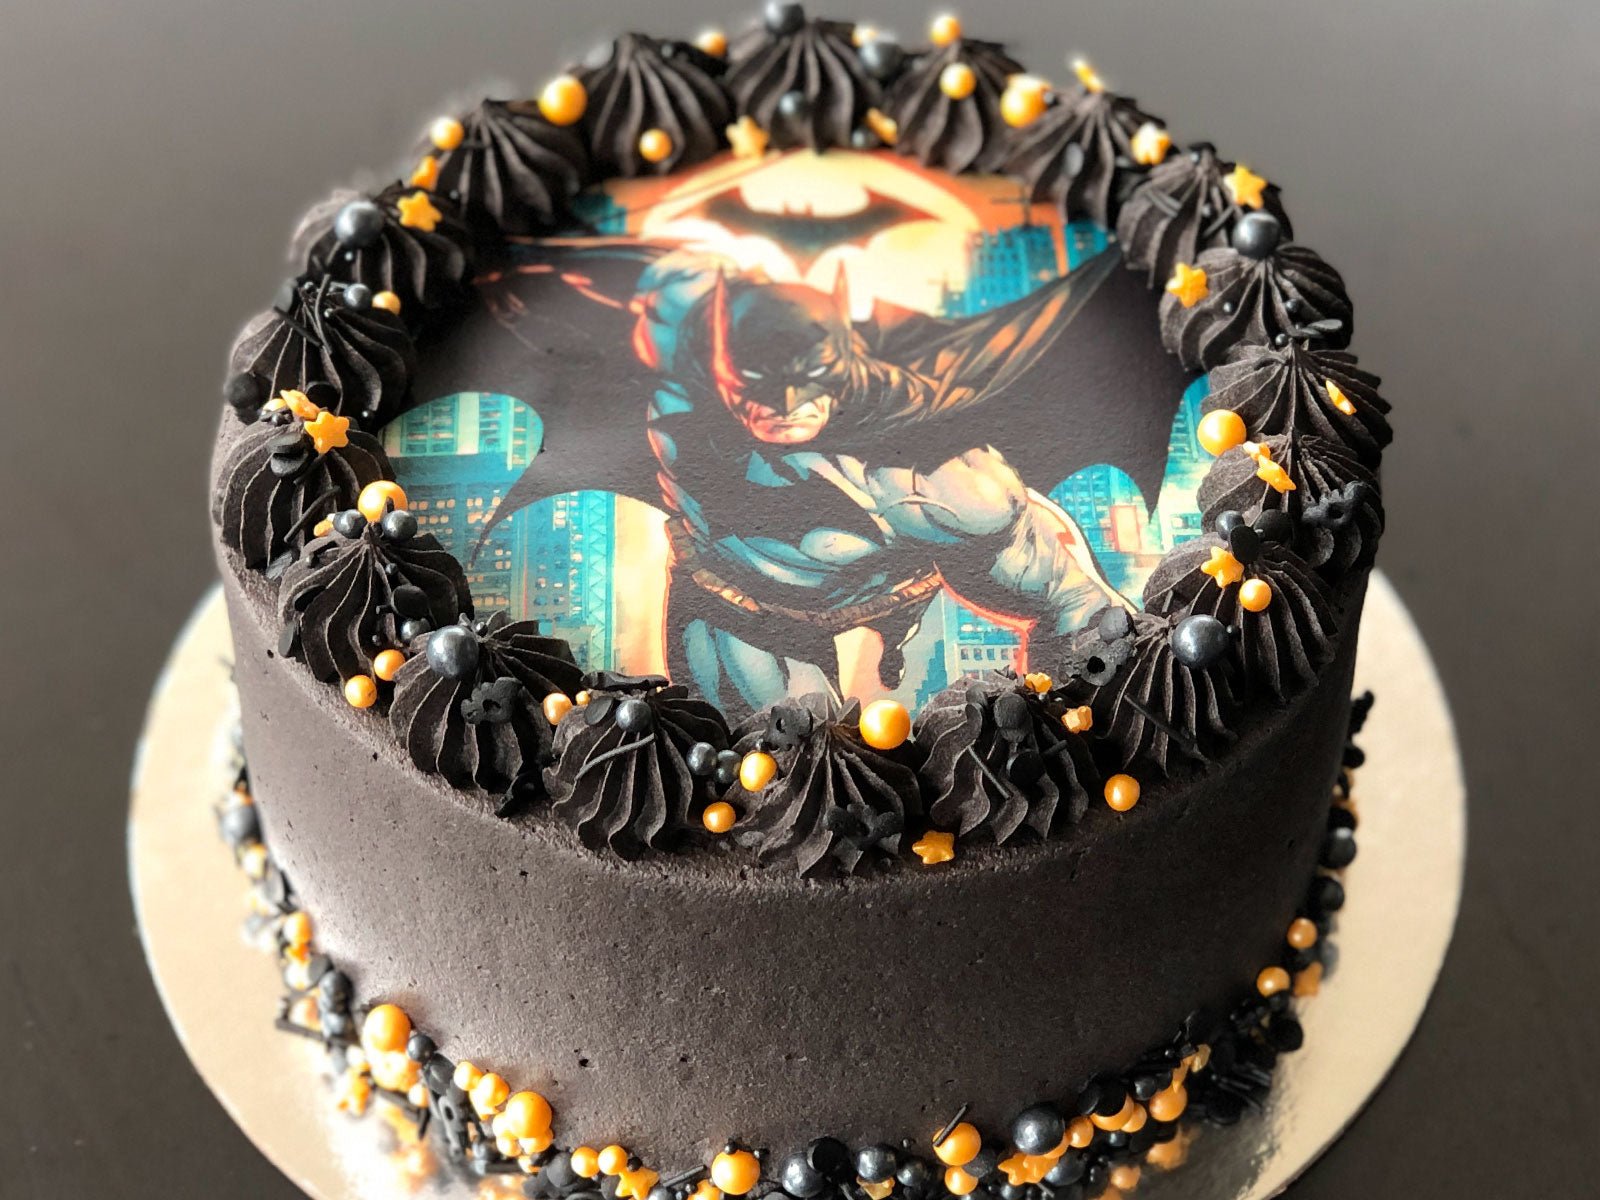 Batman birthday cake by dimebagsdarrell on DeviantArt